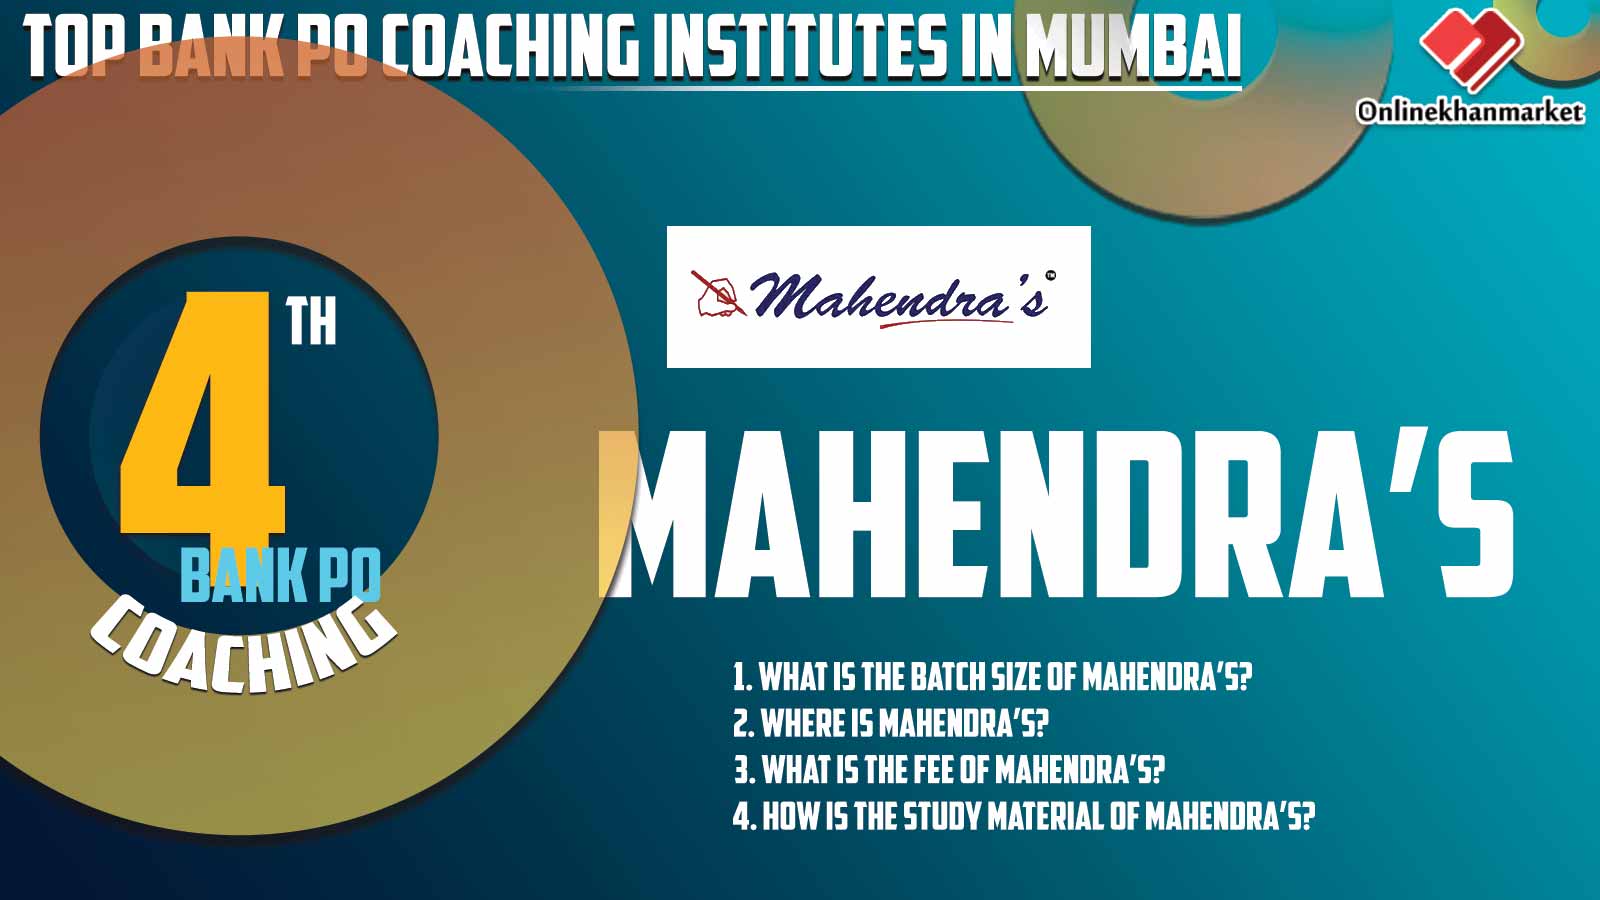 Top Bank Coaching in Mumbai